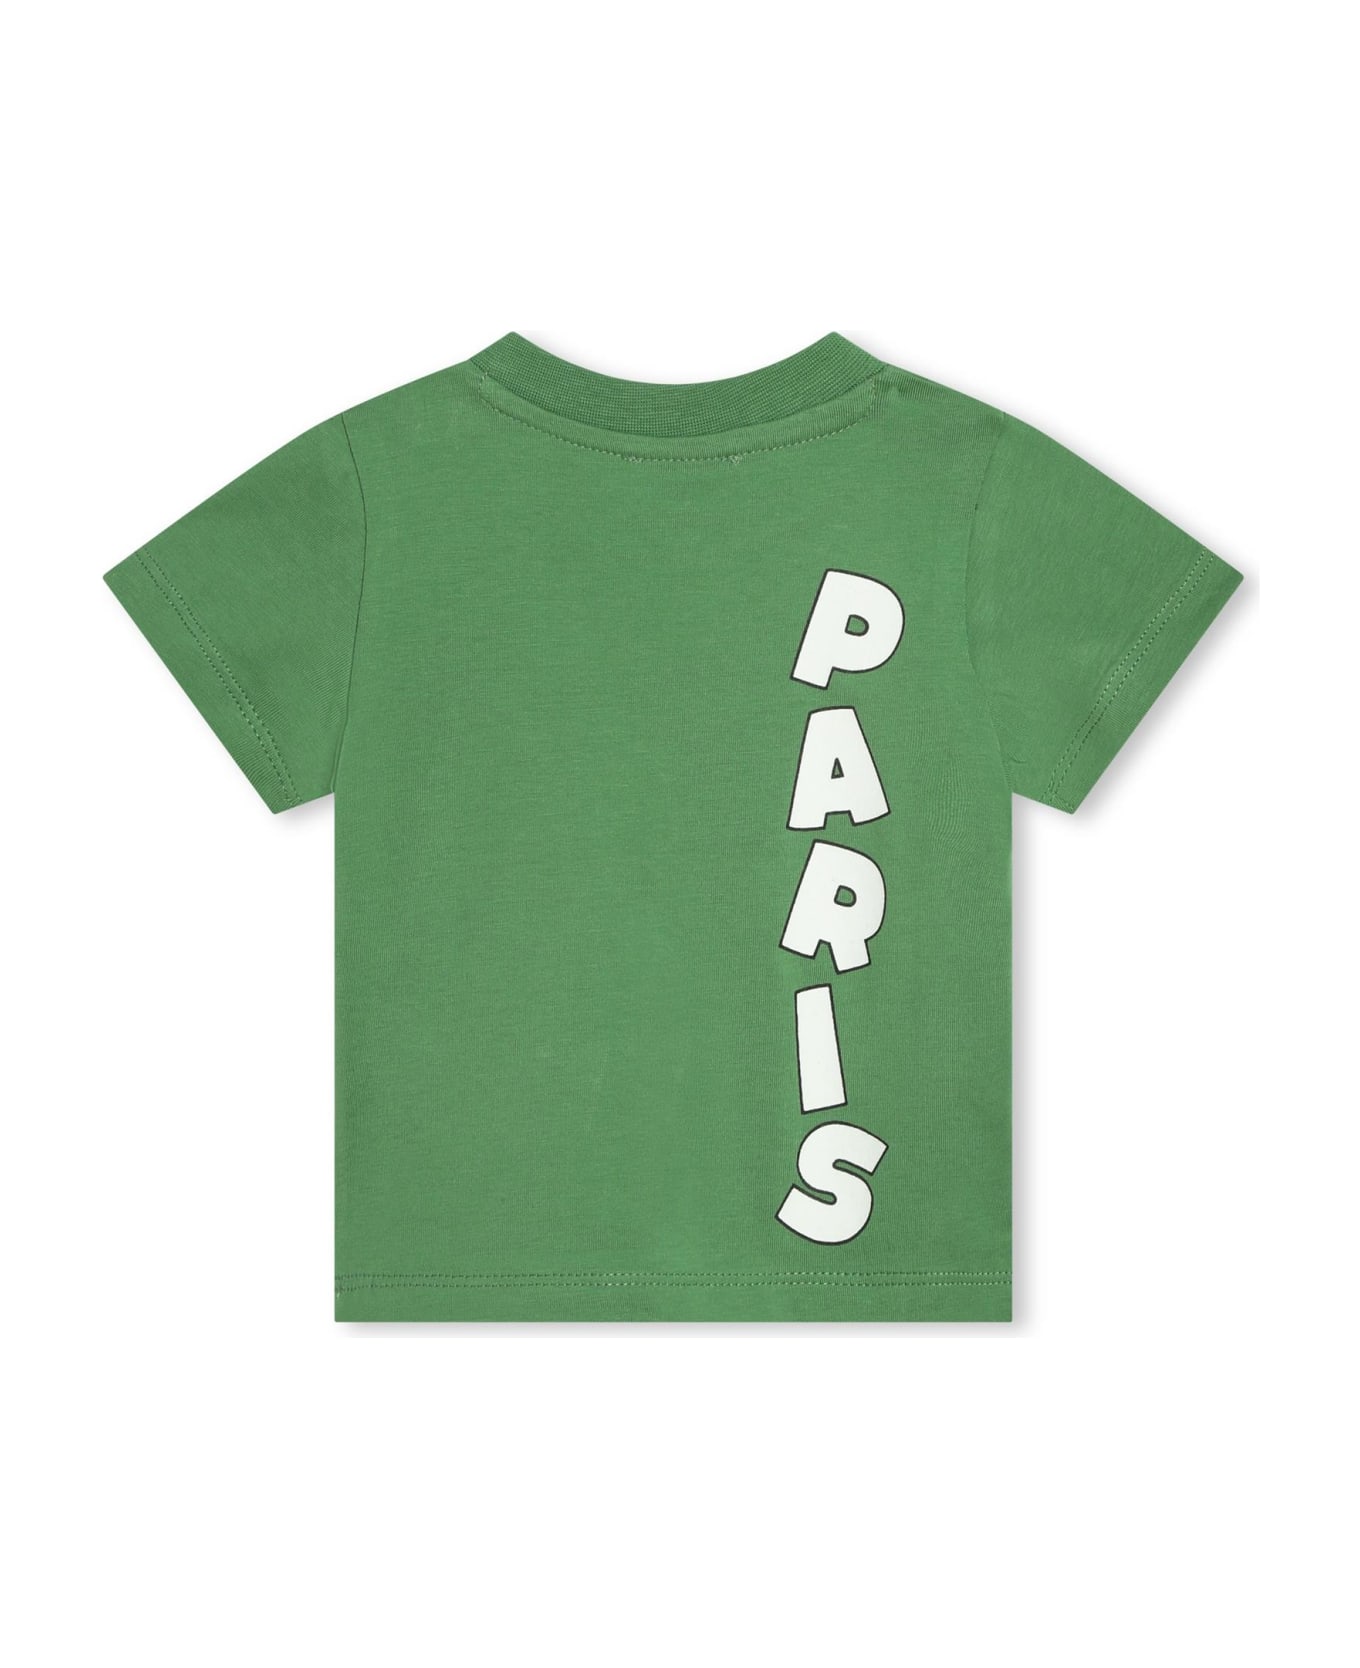 Kenzo Kids T-shirt Con Stampa - Green